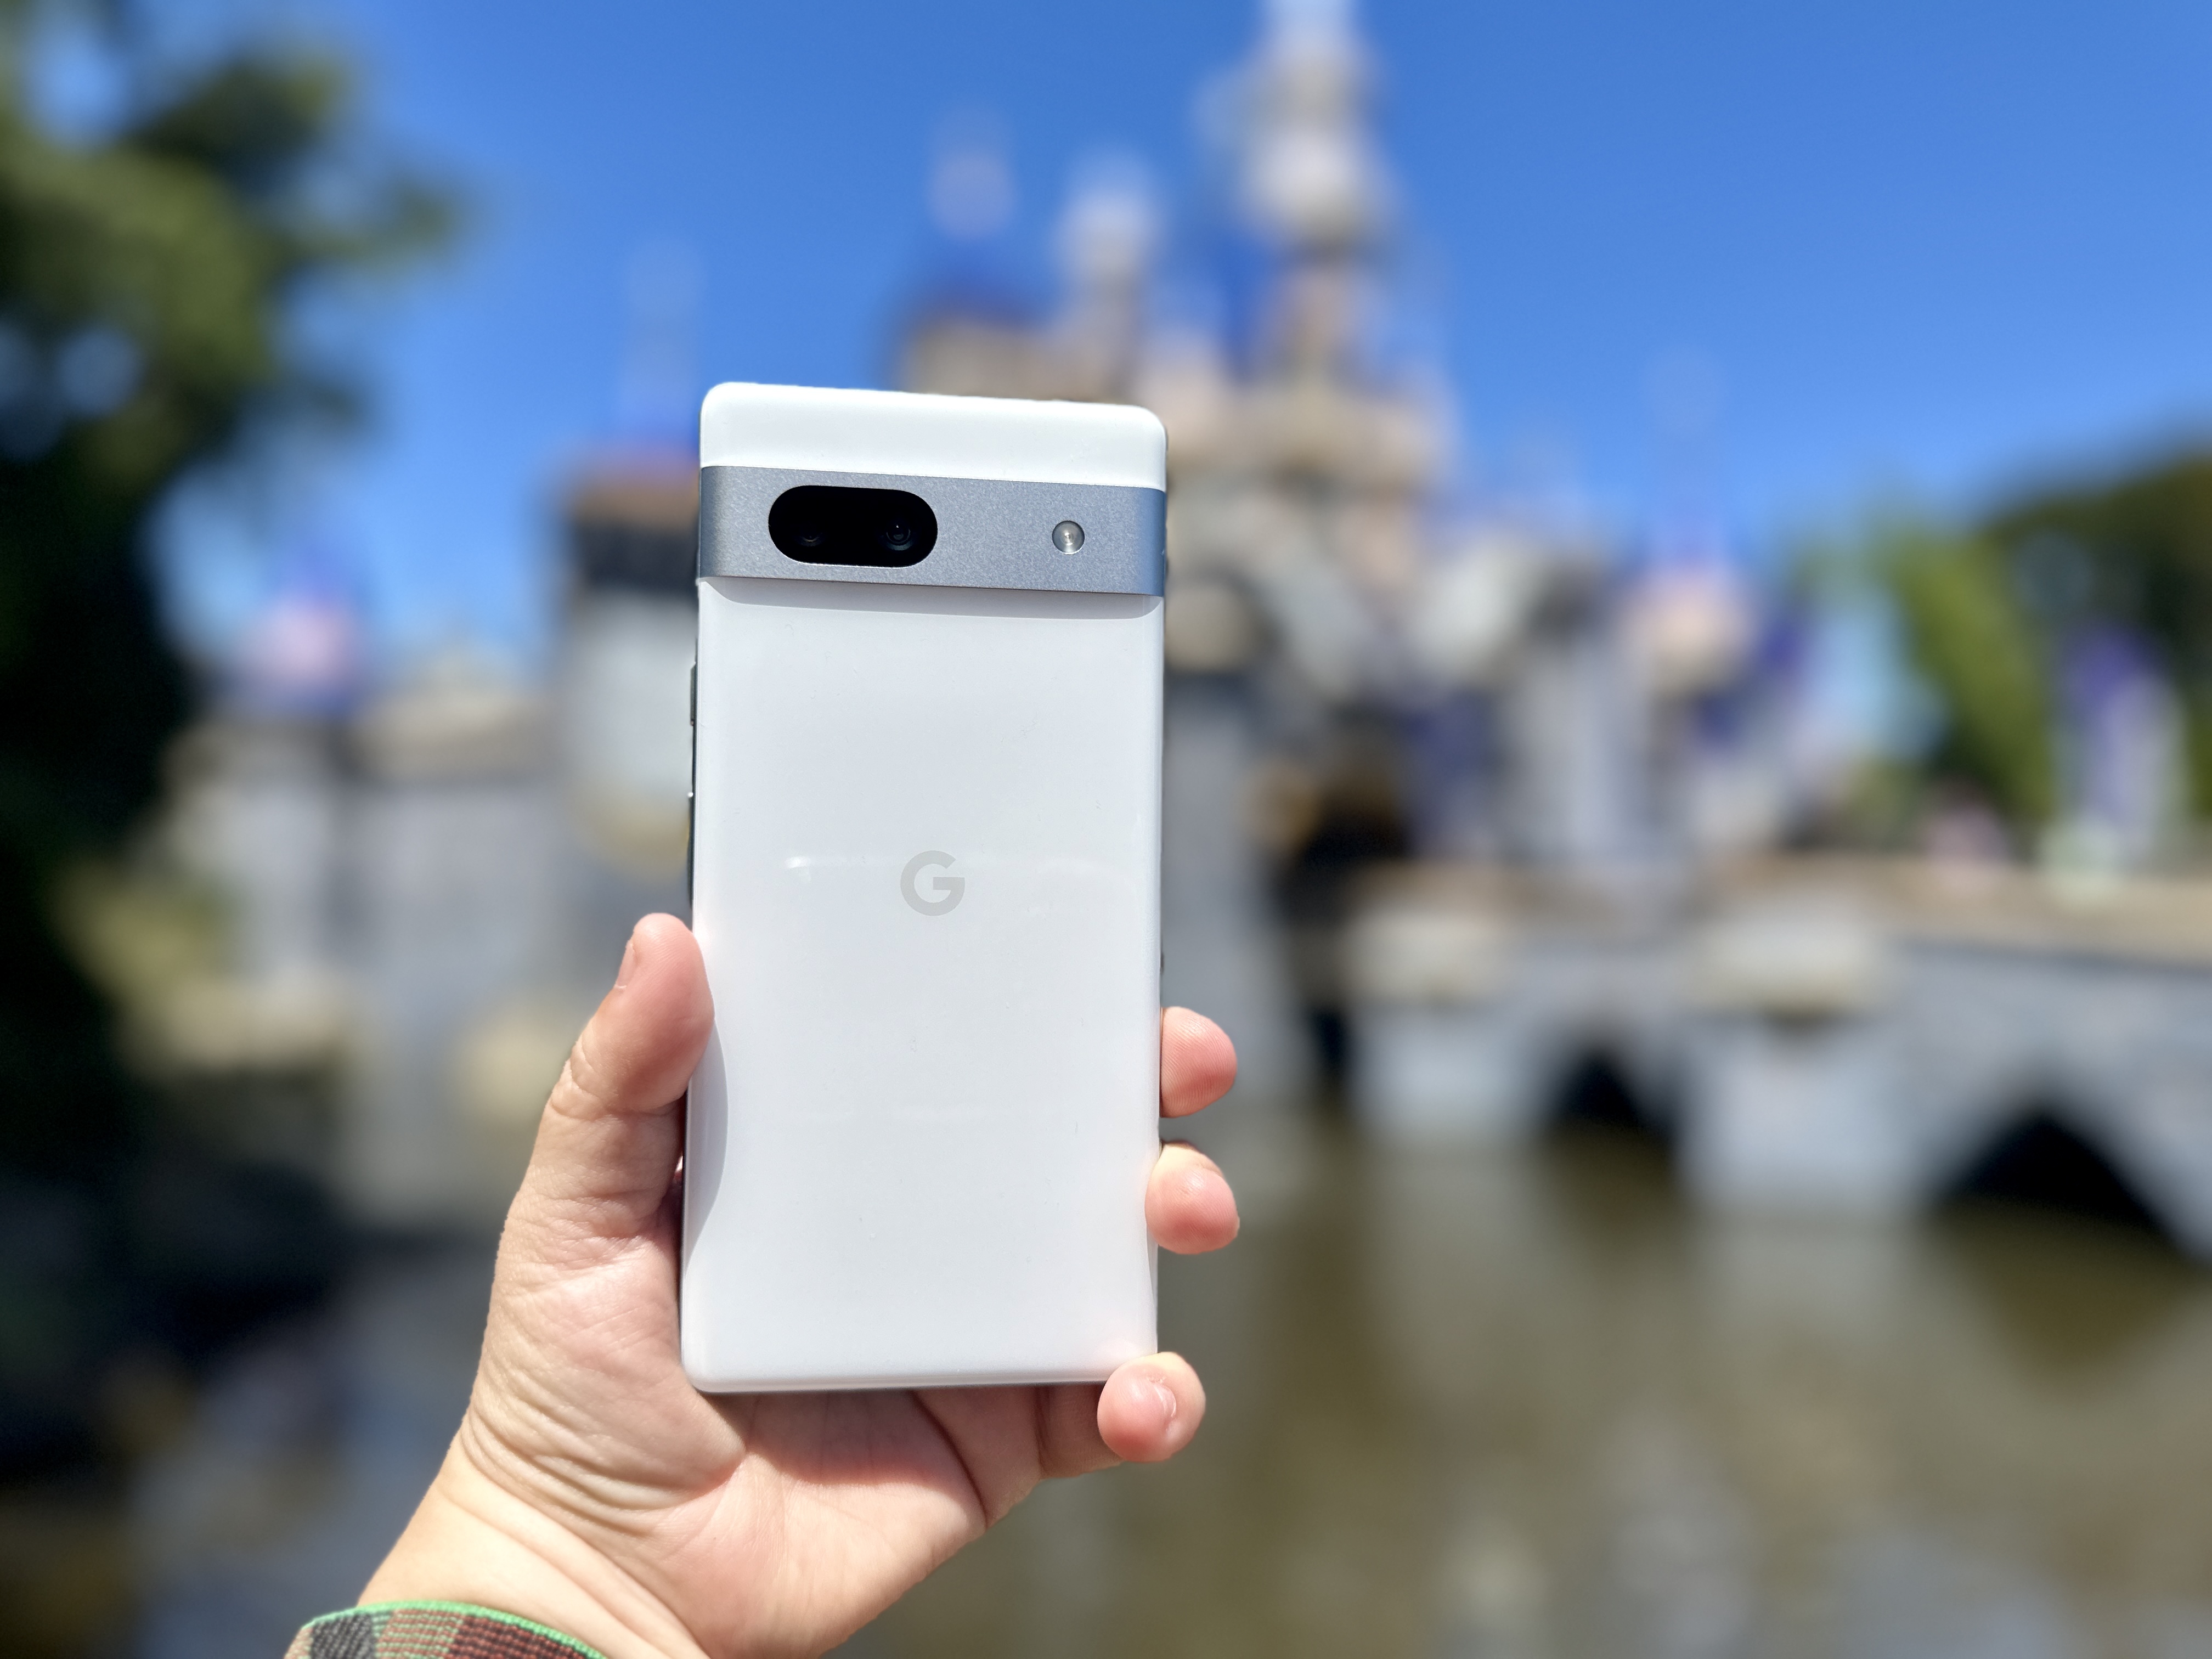 Google Pixel 7a 5G Unlocked (128GB) Smartphone - Snow